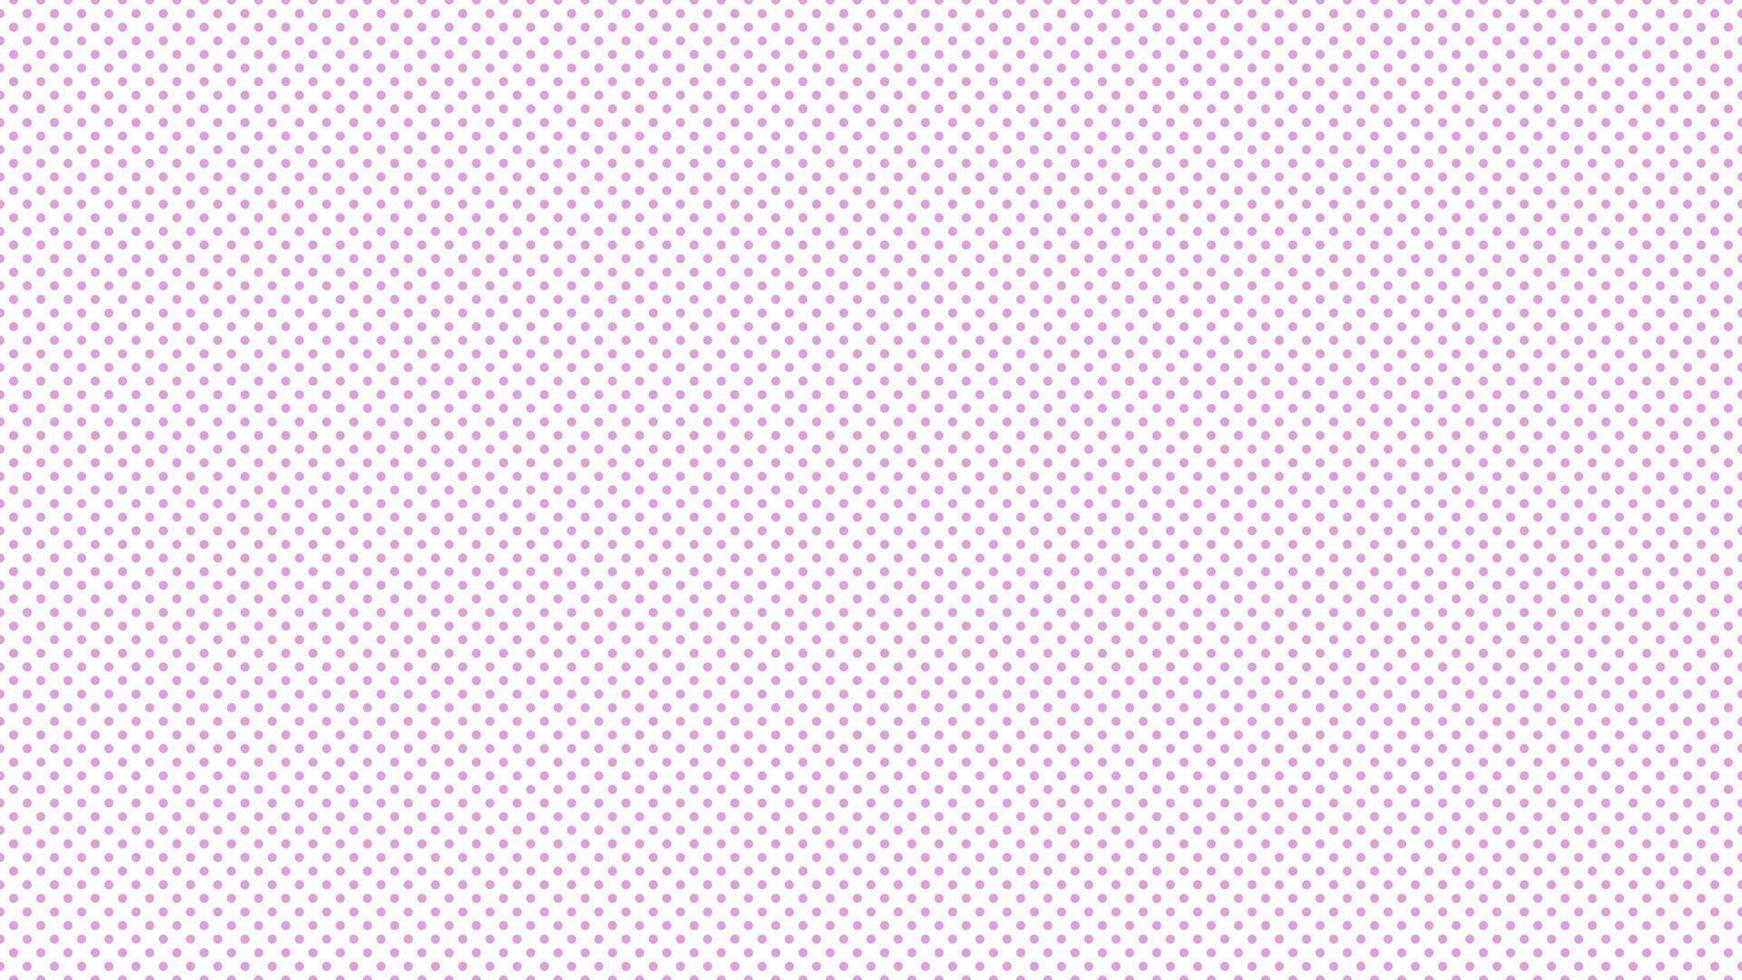 Pflaume lila Farbe Polka Punkte Hintergrund vektor